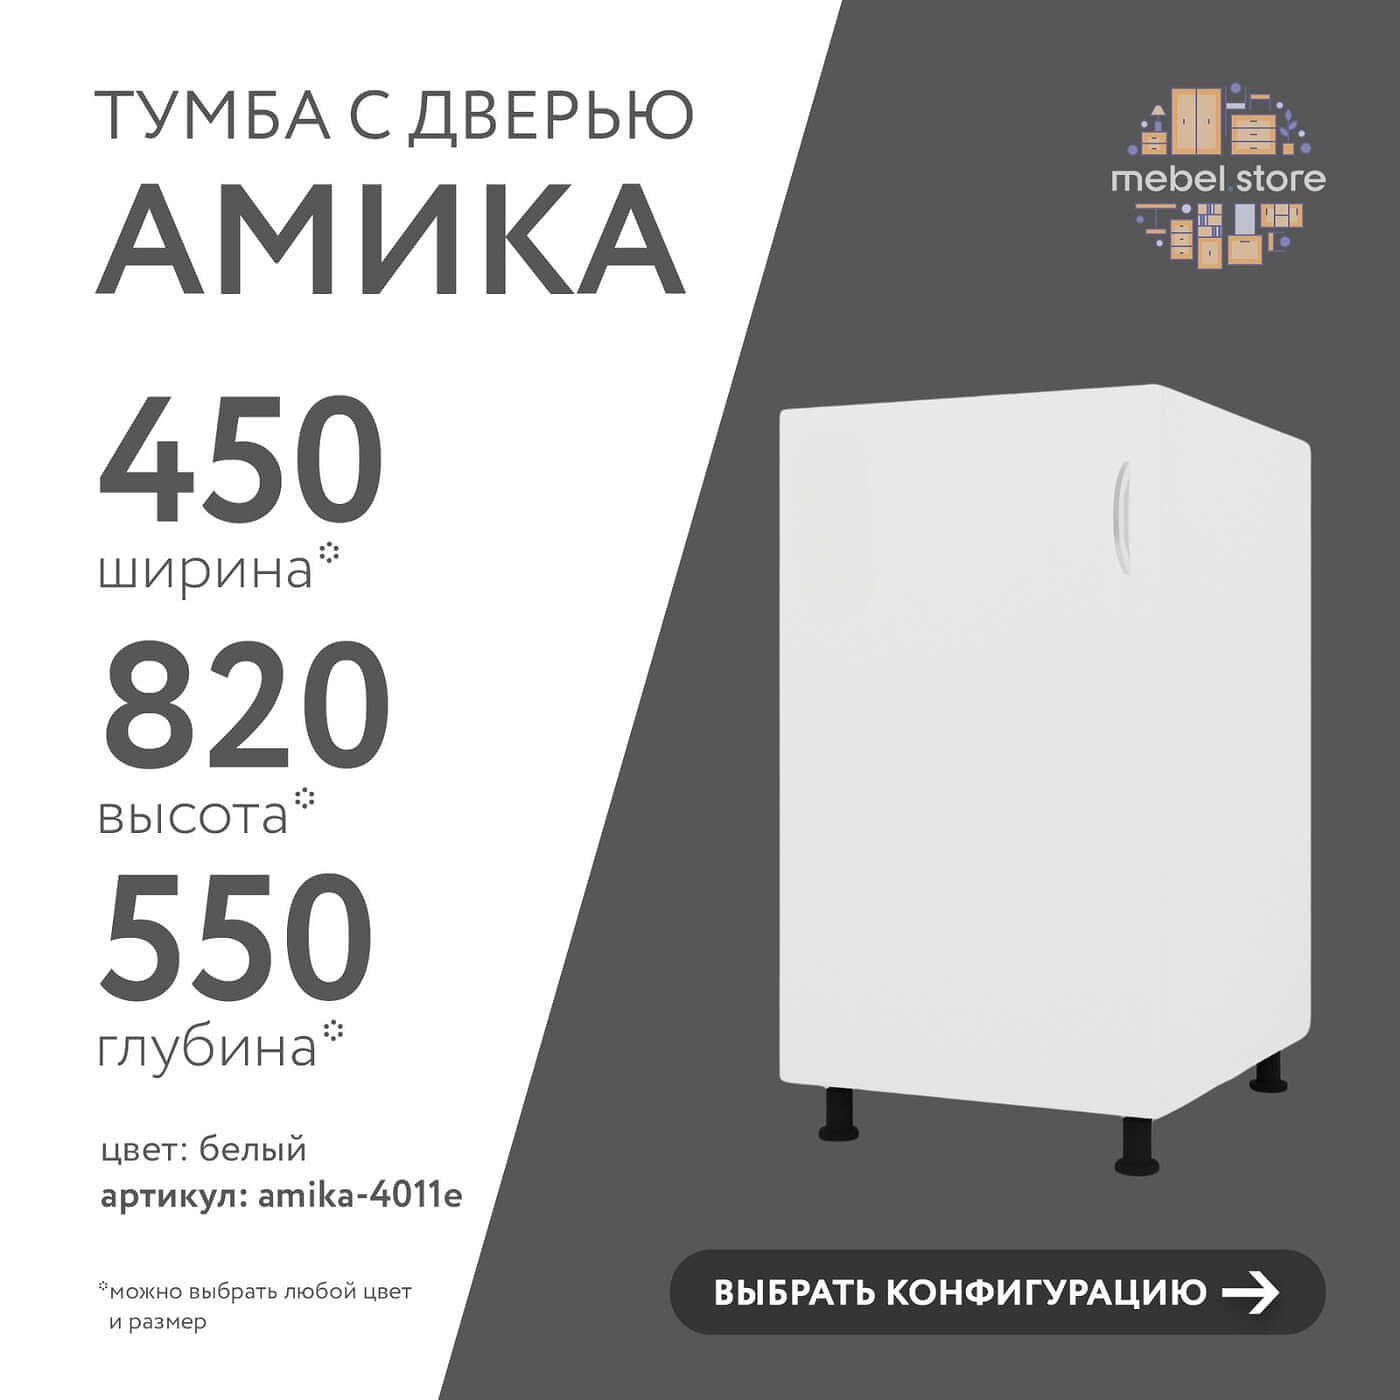 Тумба напольная Амика-4011e минимализм для кухни - фото 1 large